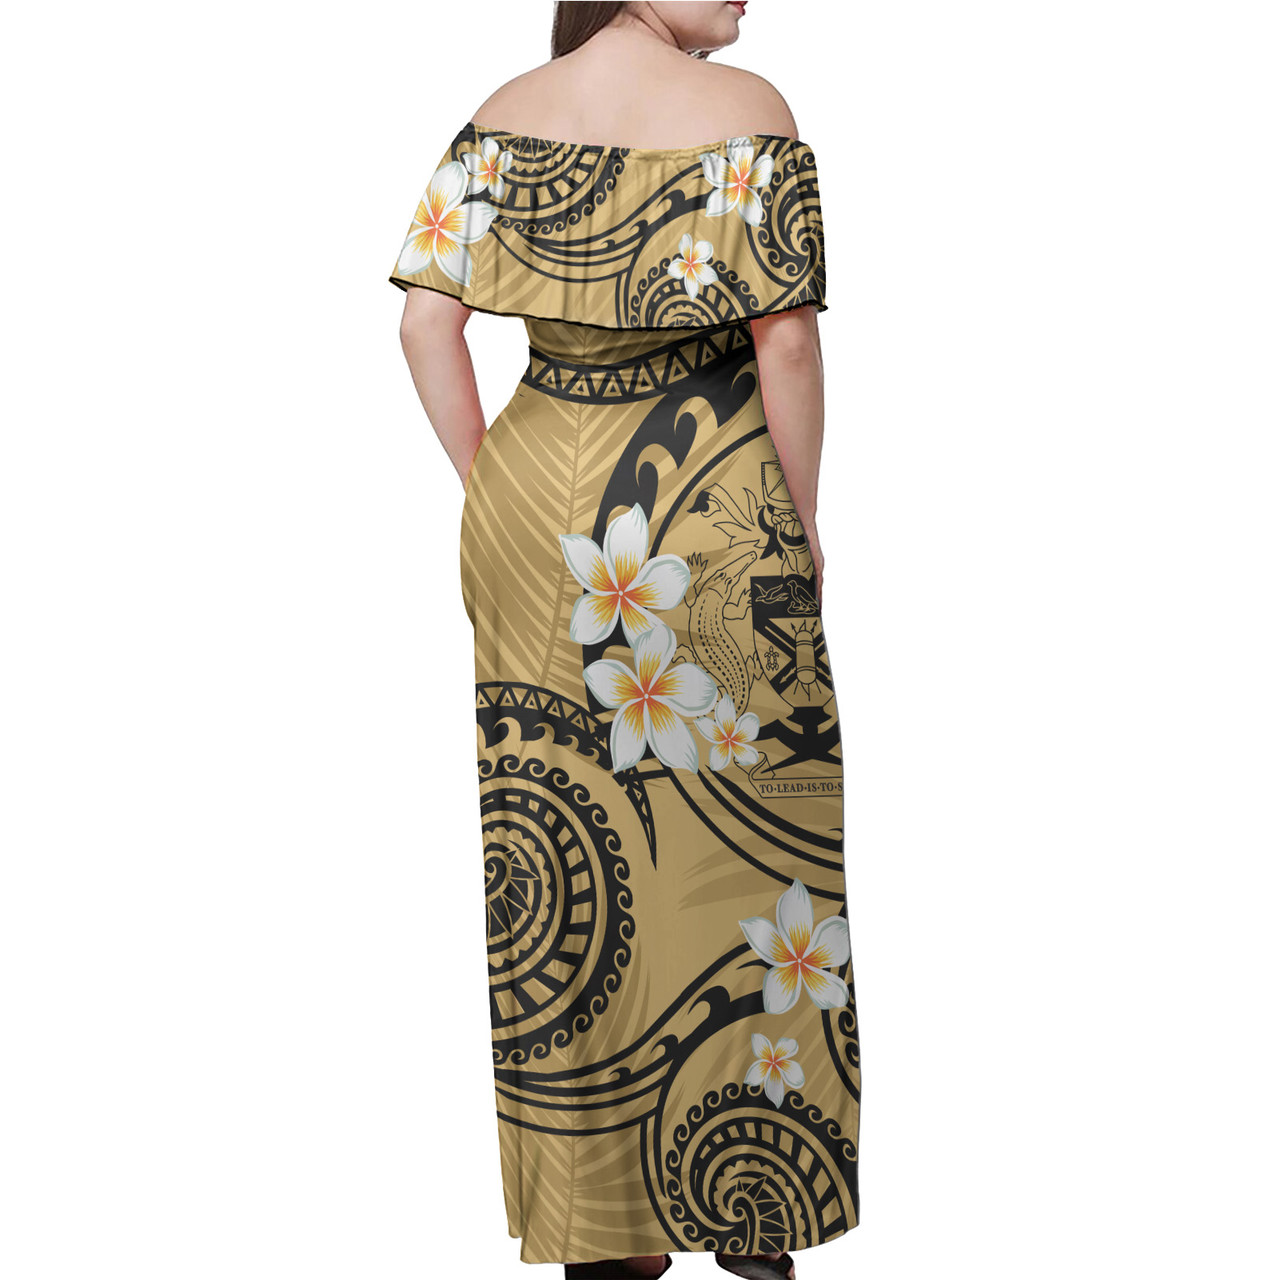 Solomon Islands Off Shoulder Long Dress Plumeria Flowers Tribal Motif Yellow Version